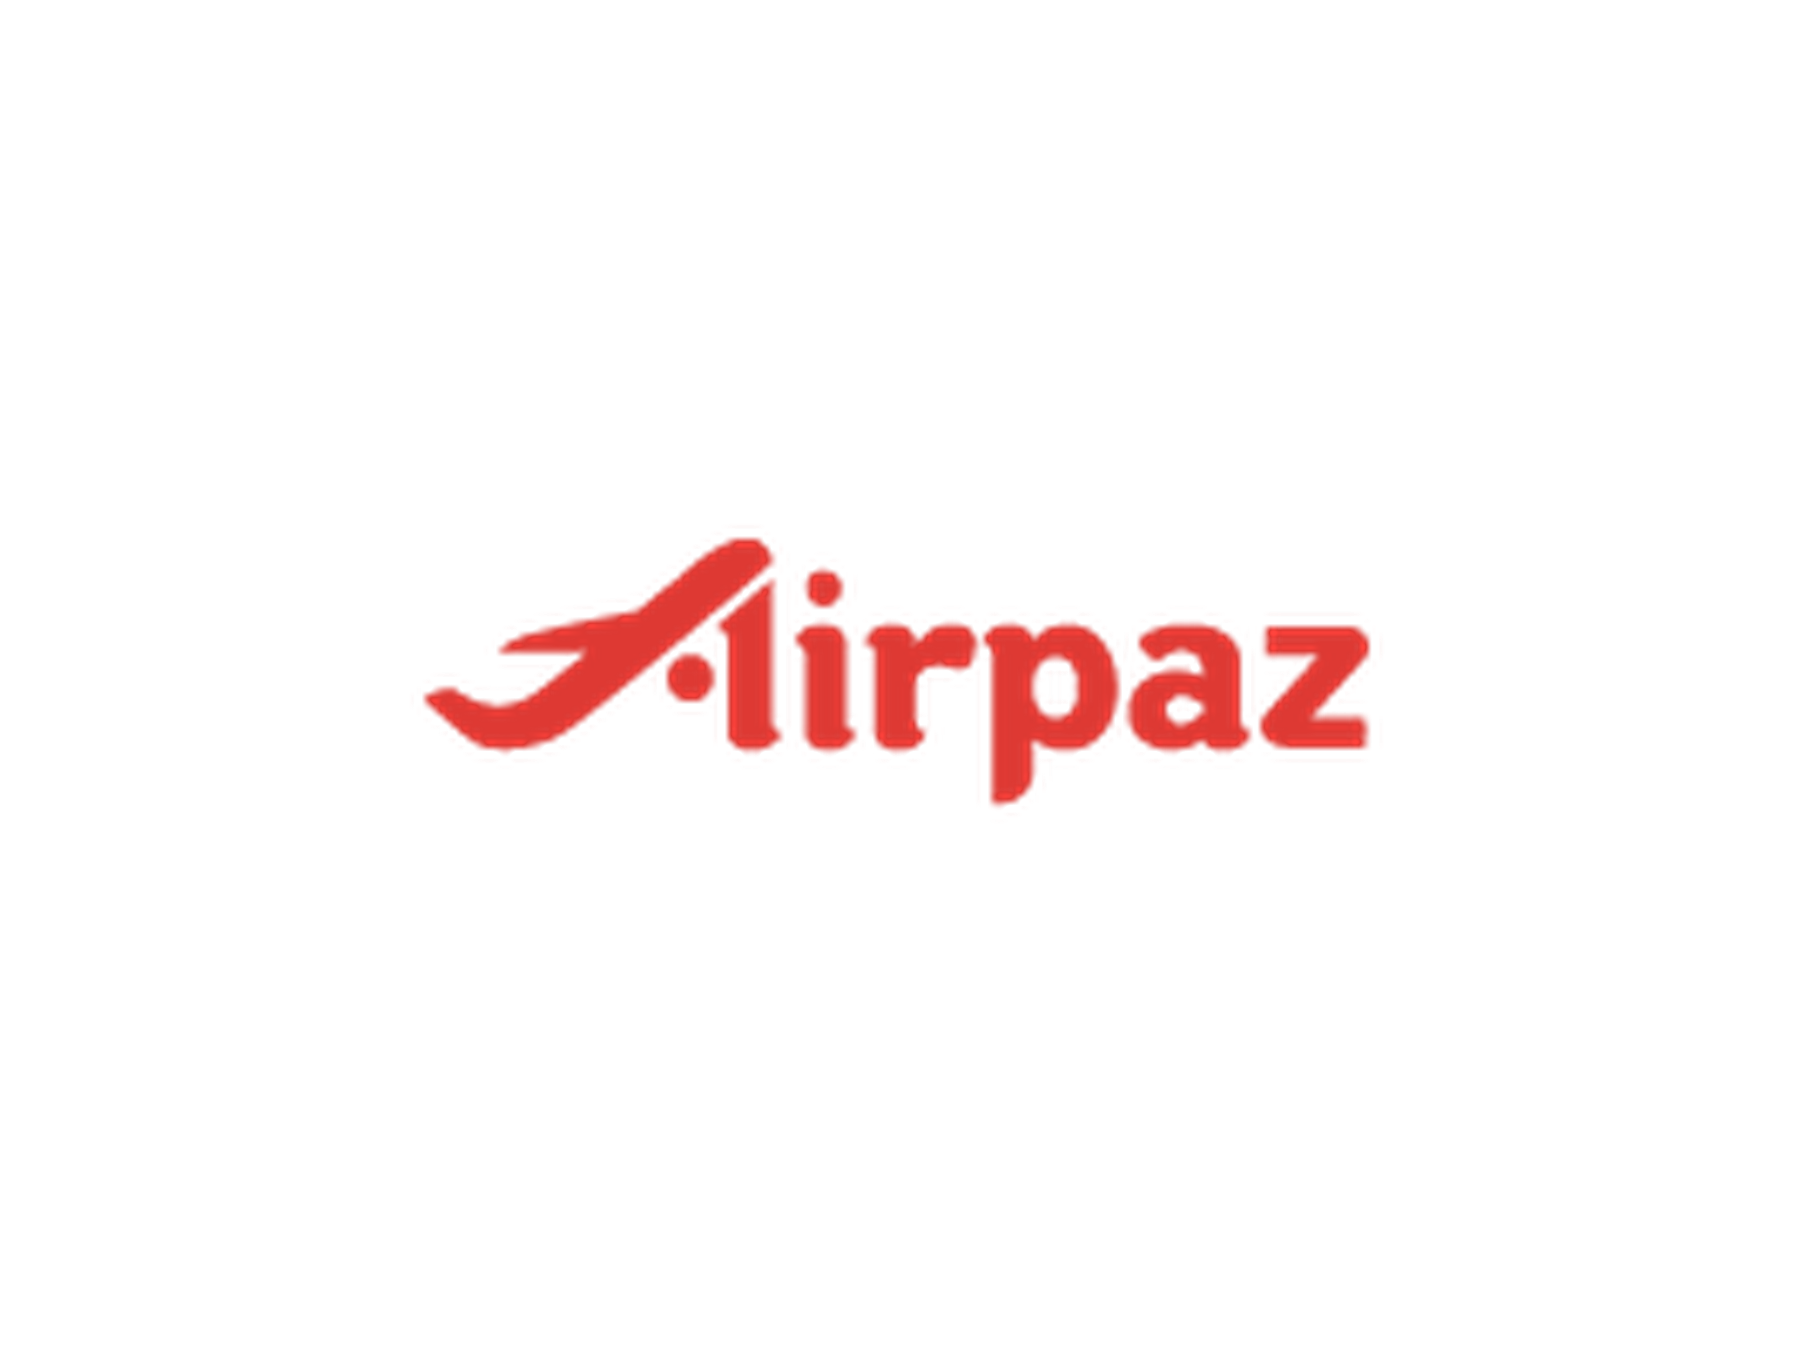 Airpaz Promo Code